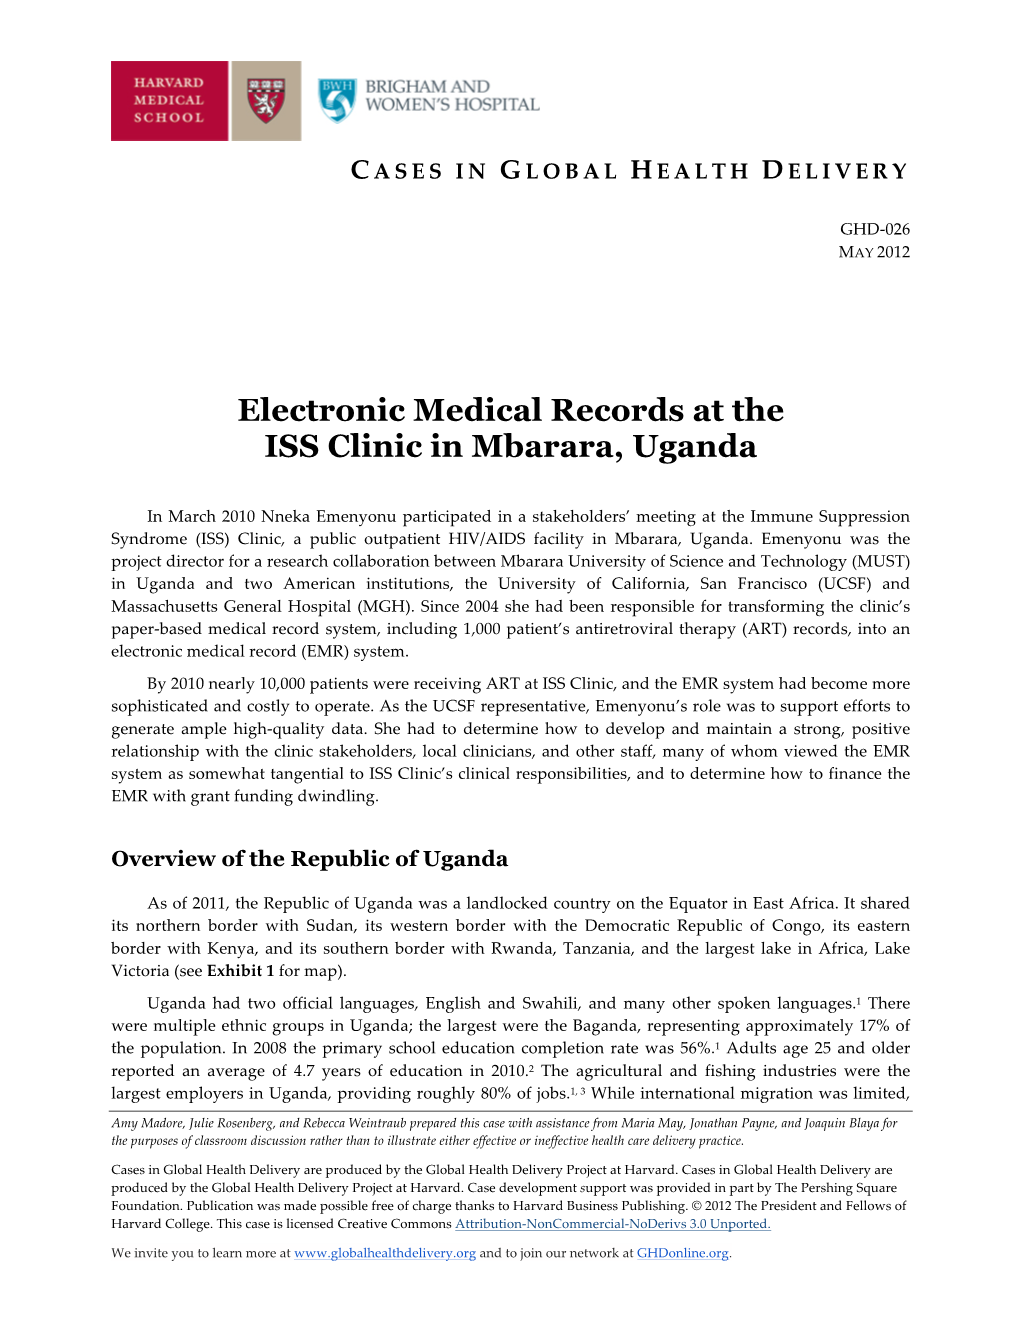 Electronic Medical Records at ISS Clinic Mbarara, Uganda